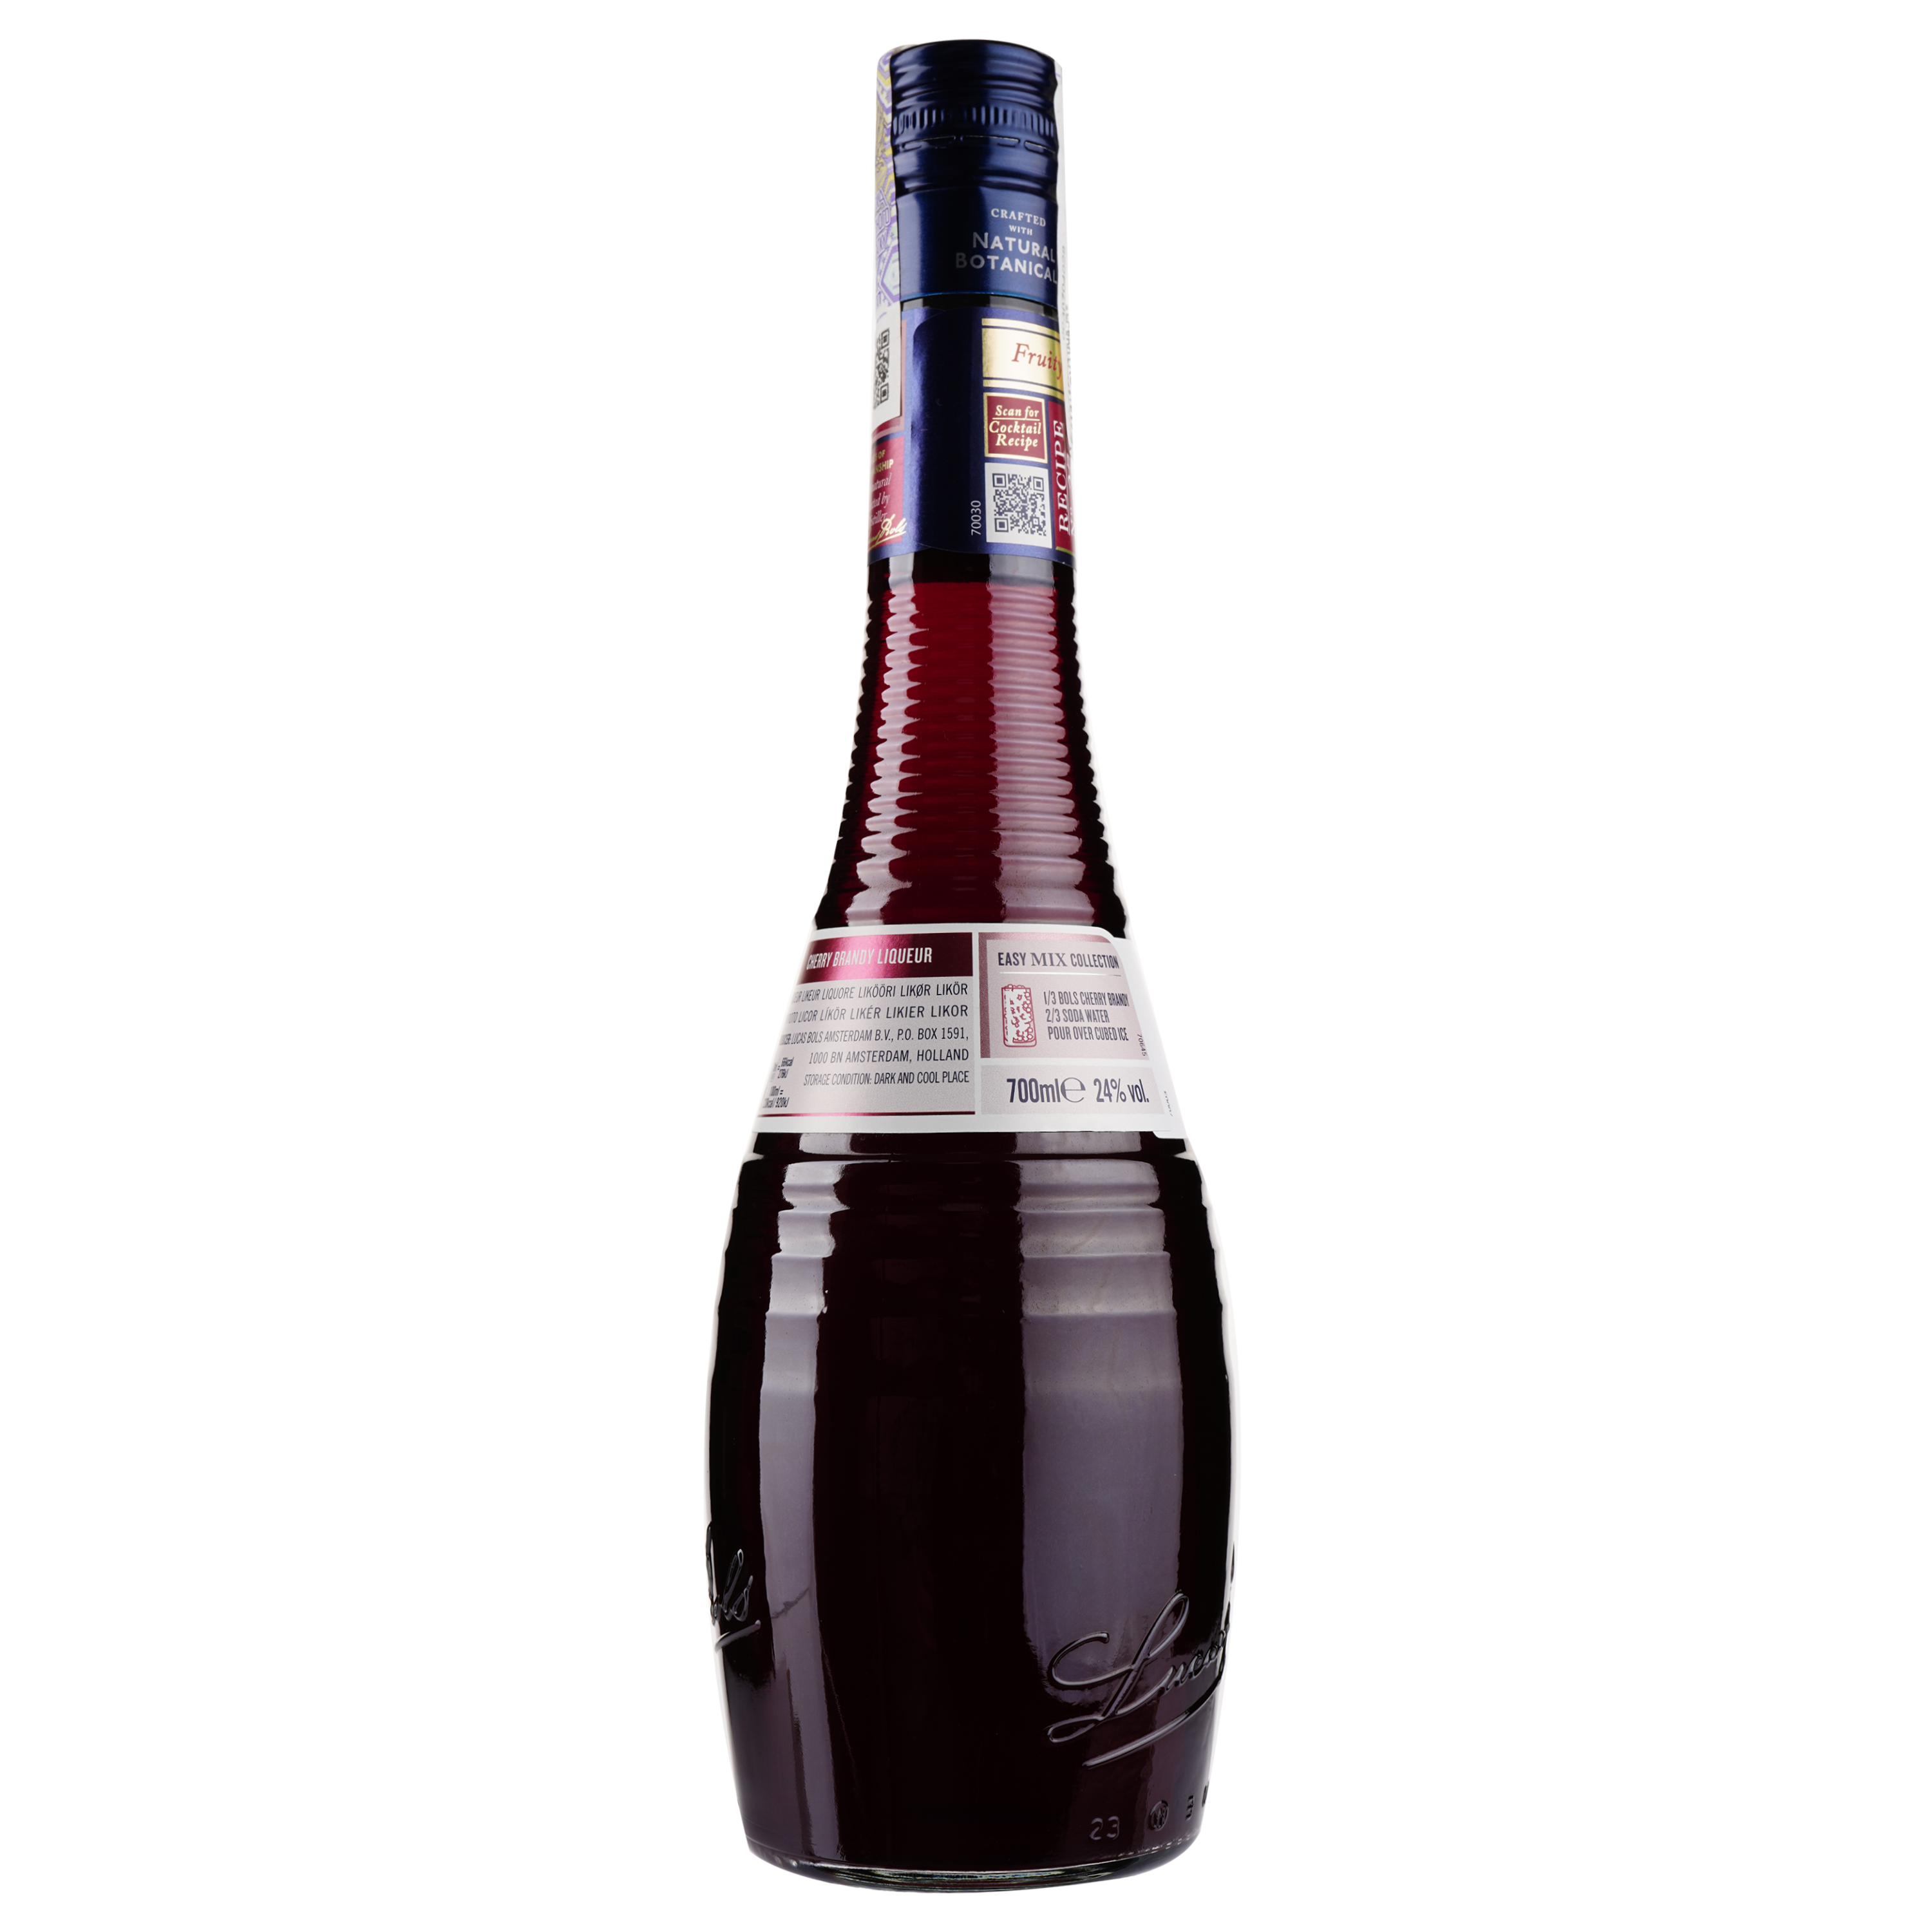 Ликер Bols Cherry Brandy, 24 %, 0,7 л - фото 1